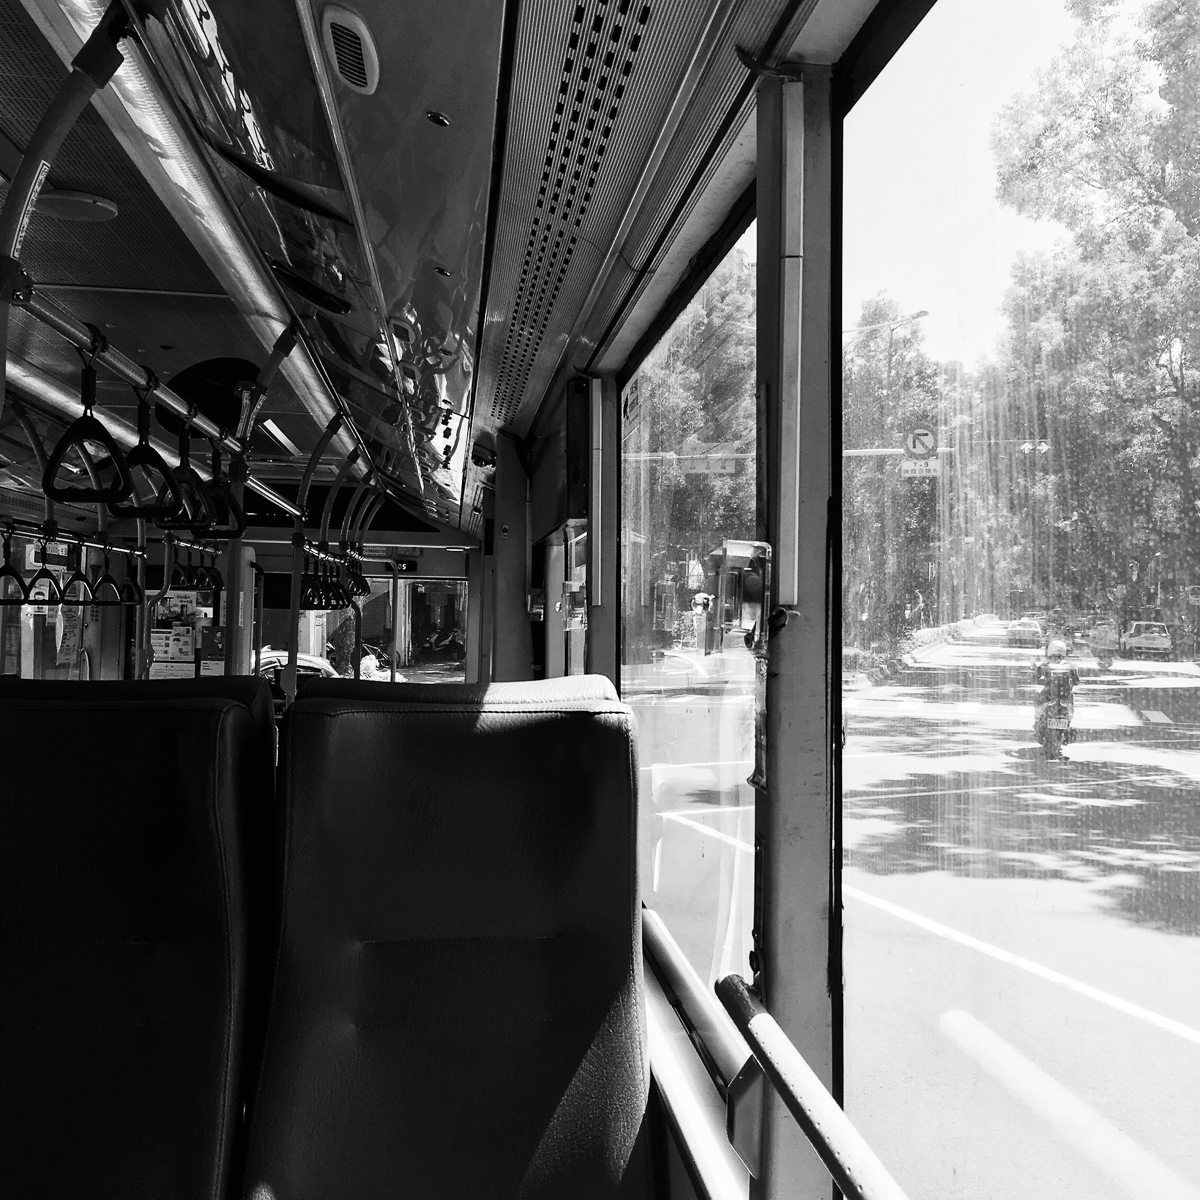 Photo: Bus